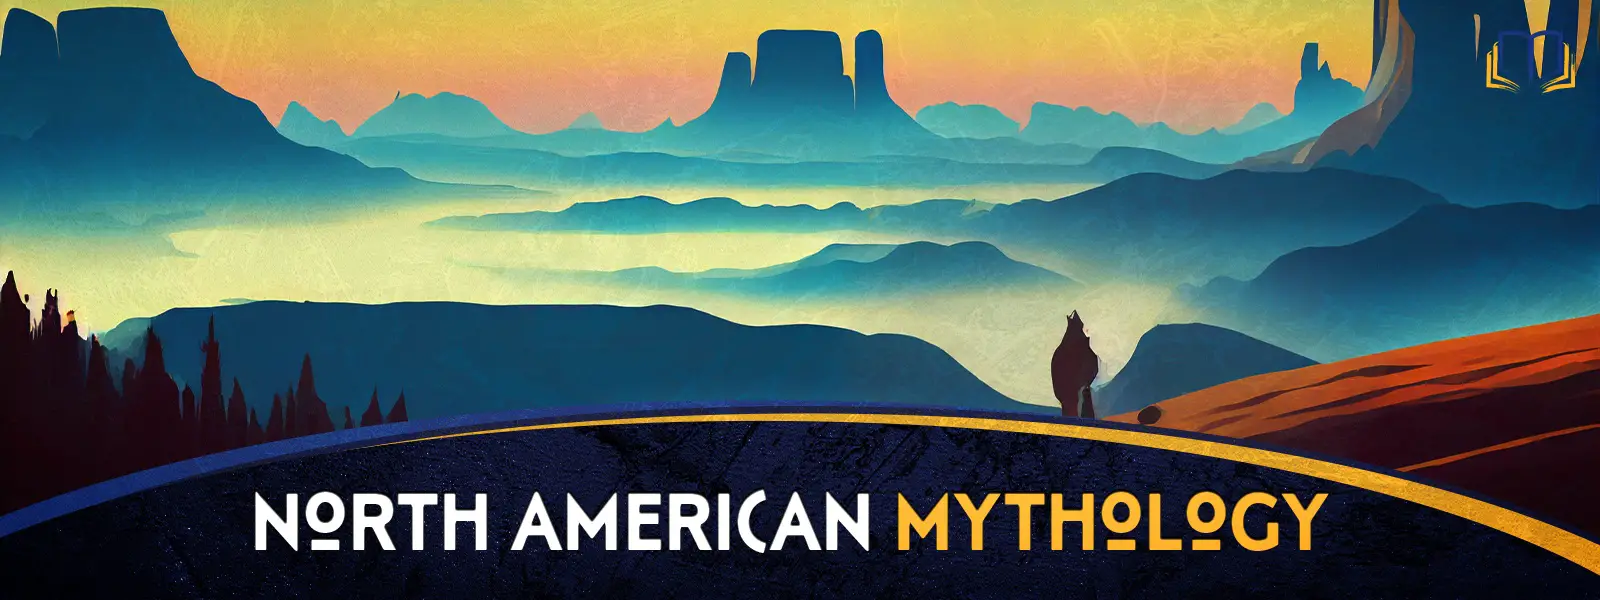 North American Mythology Hub Landscape